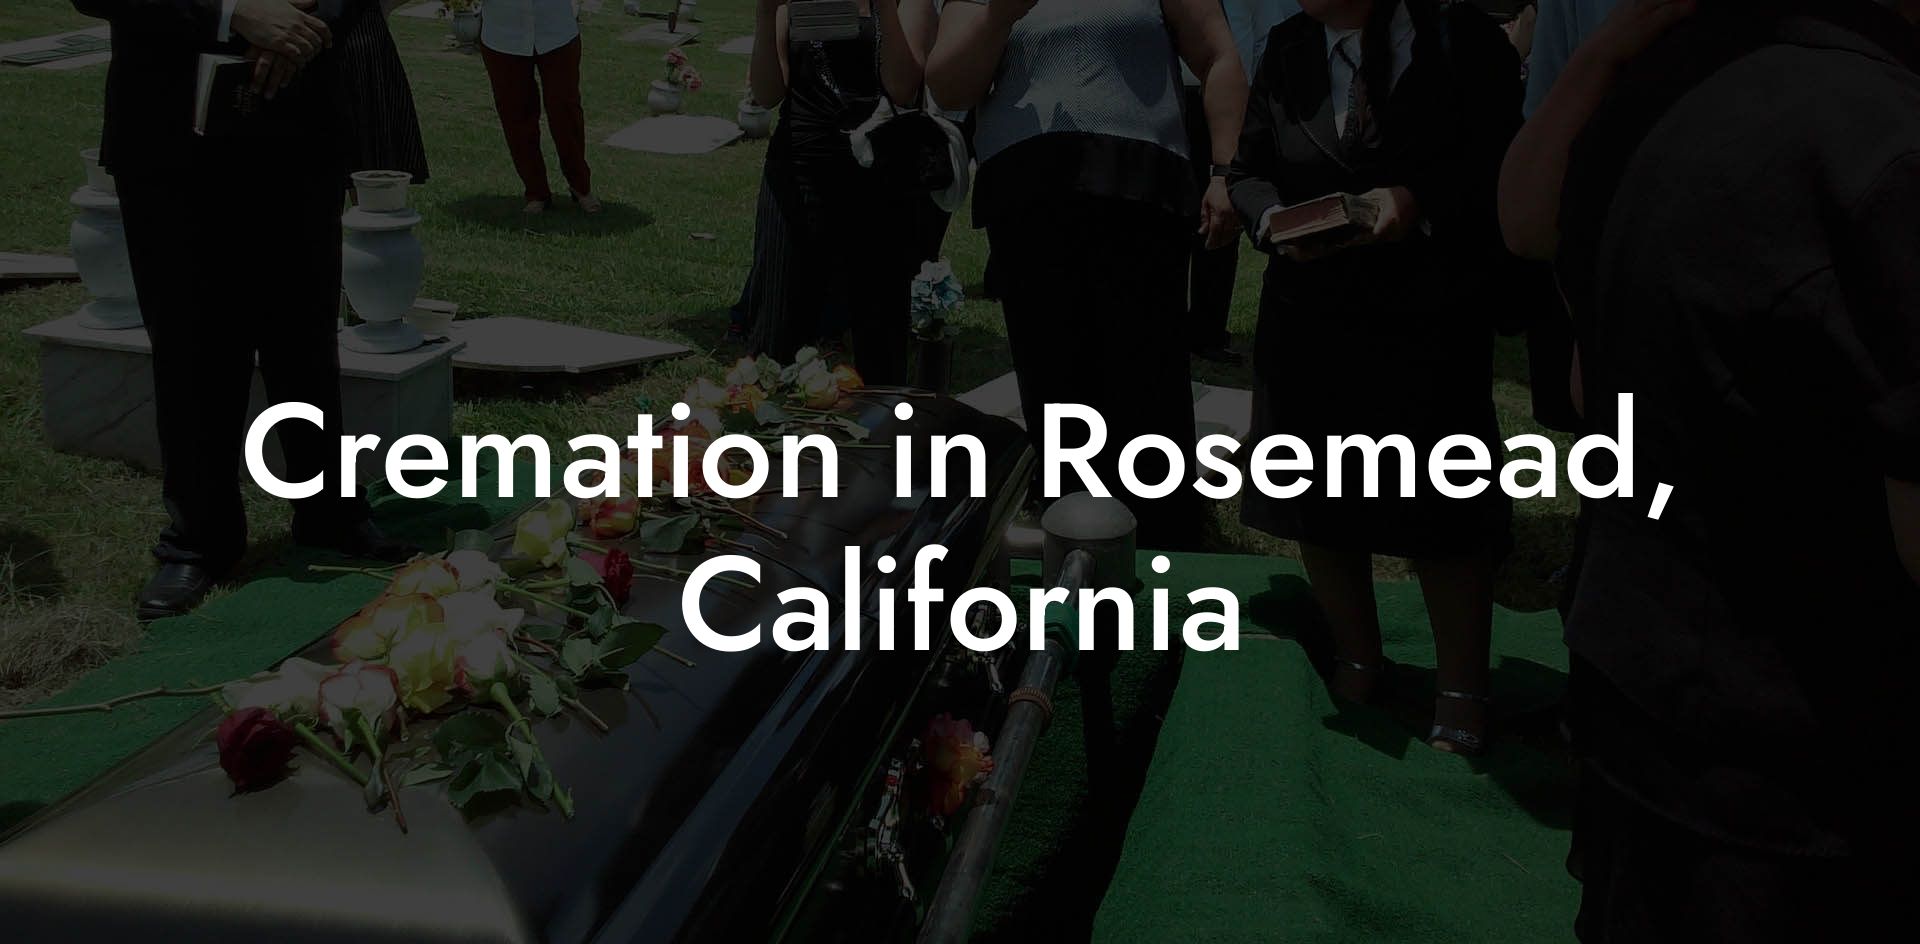 Cremation in Rosemead, California